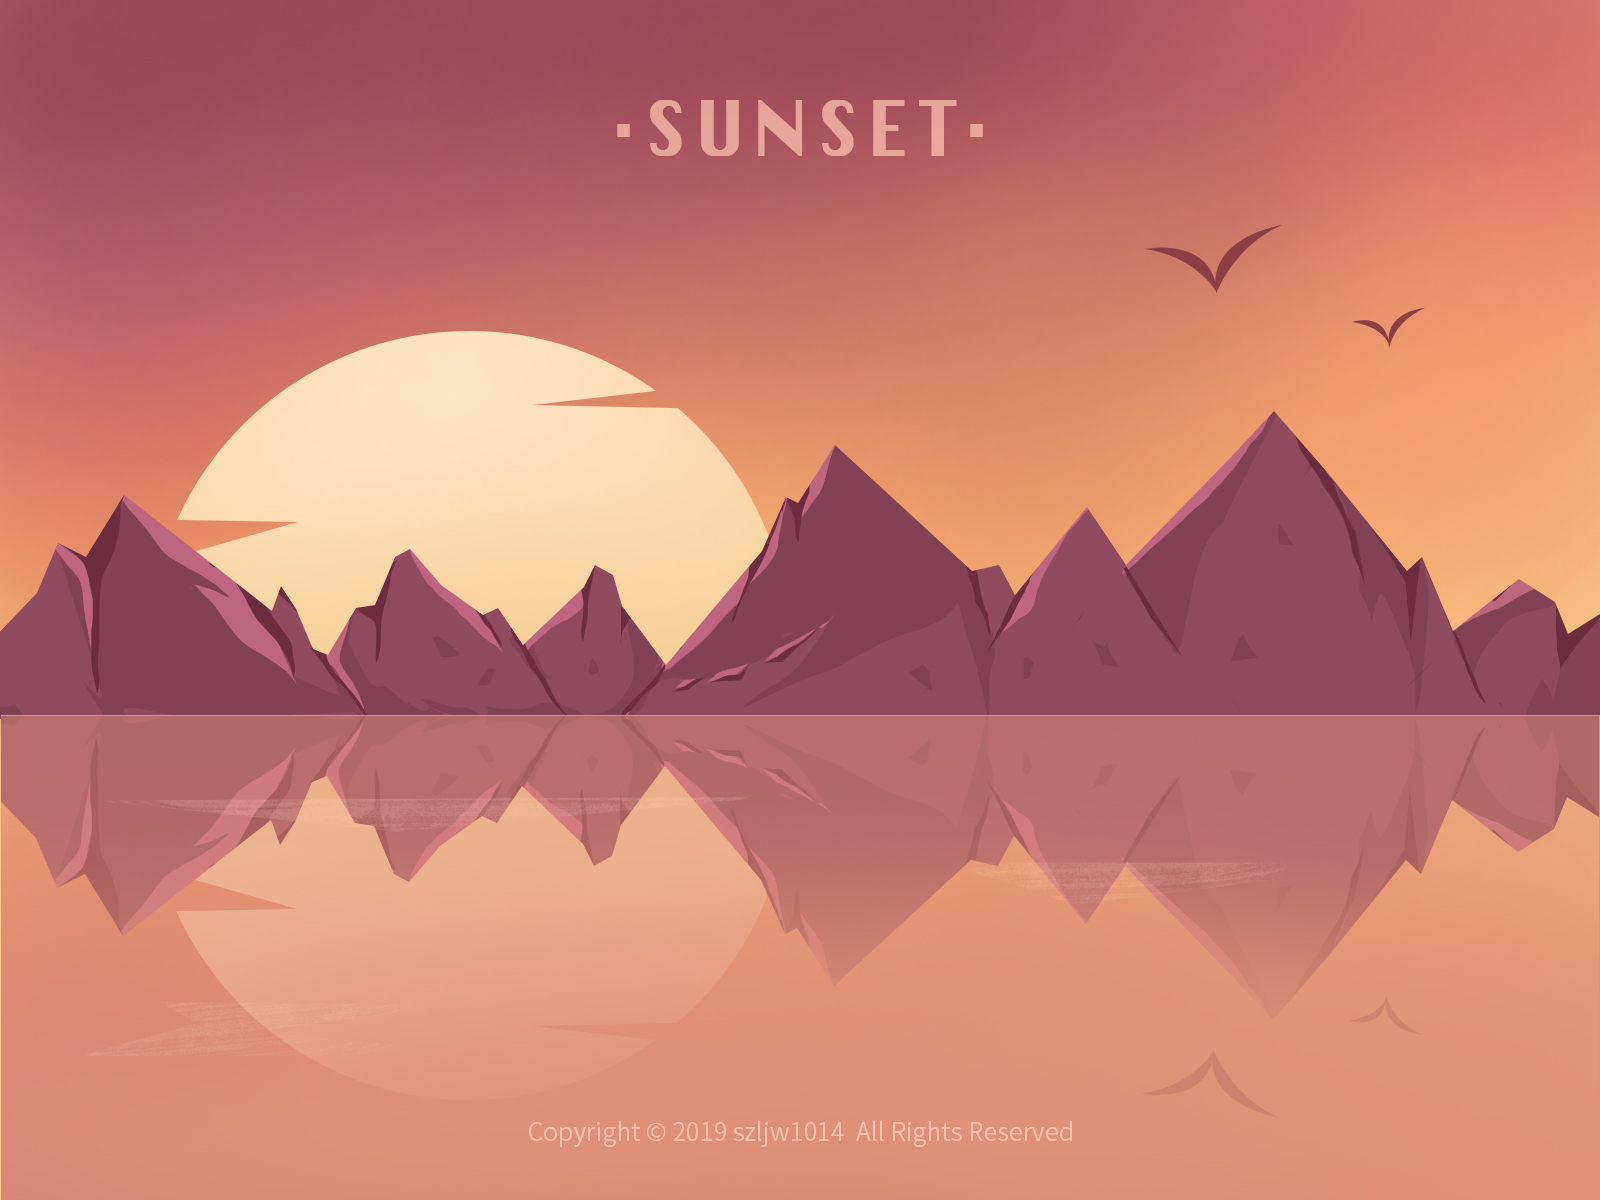 Sunset 落日 sun 插画 illustration